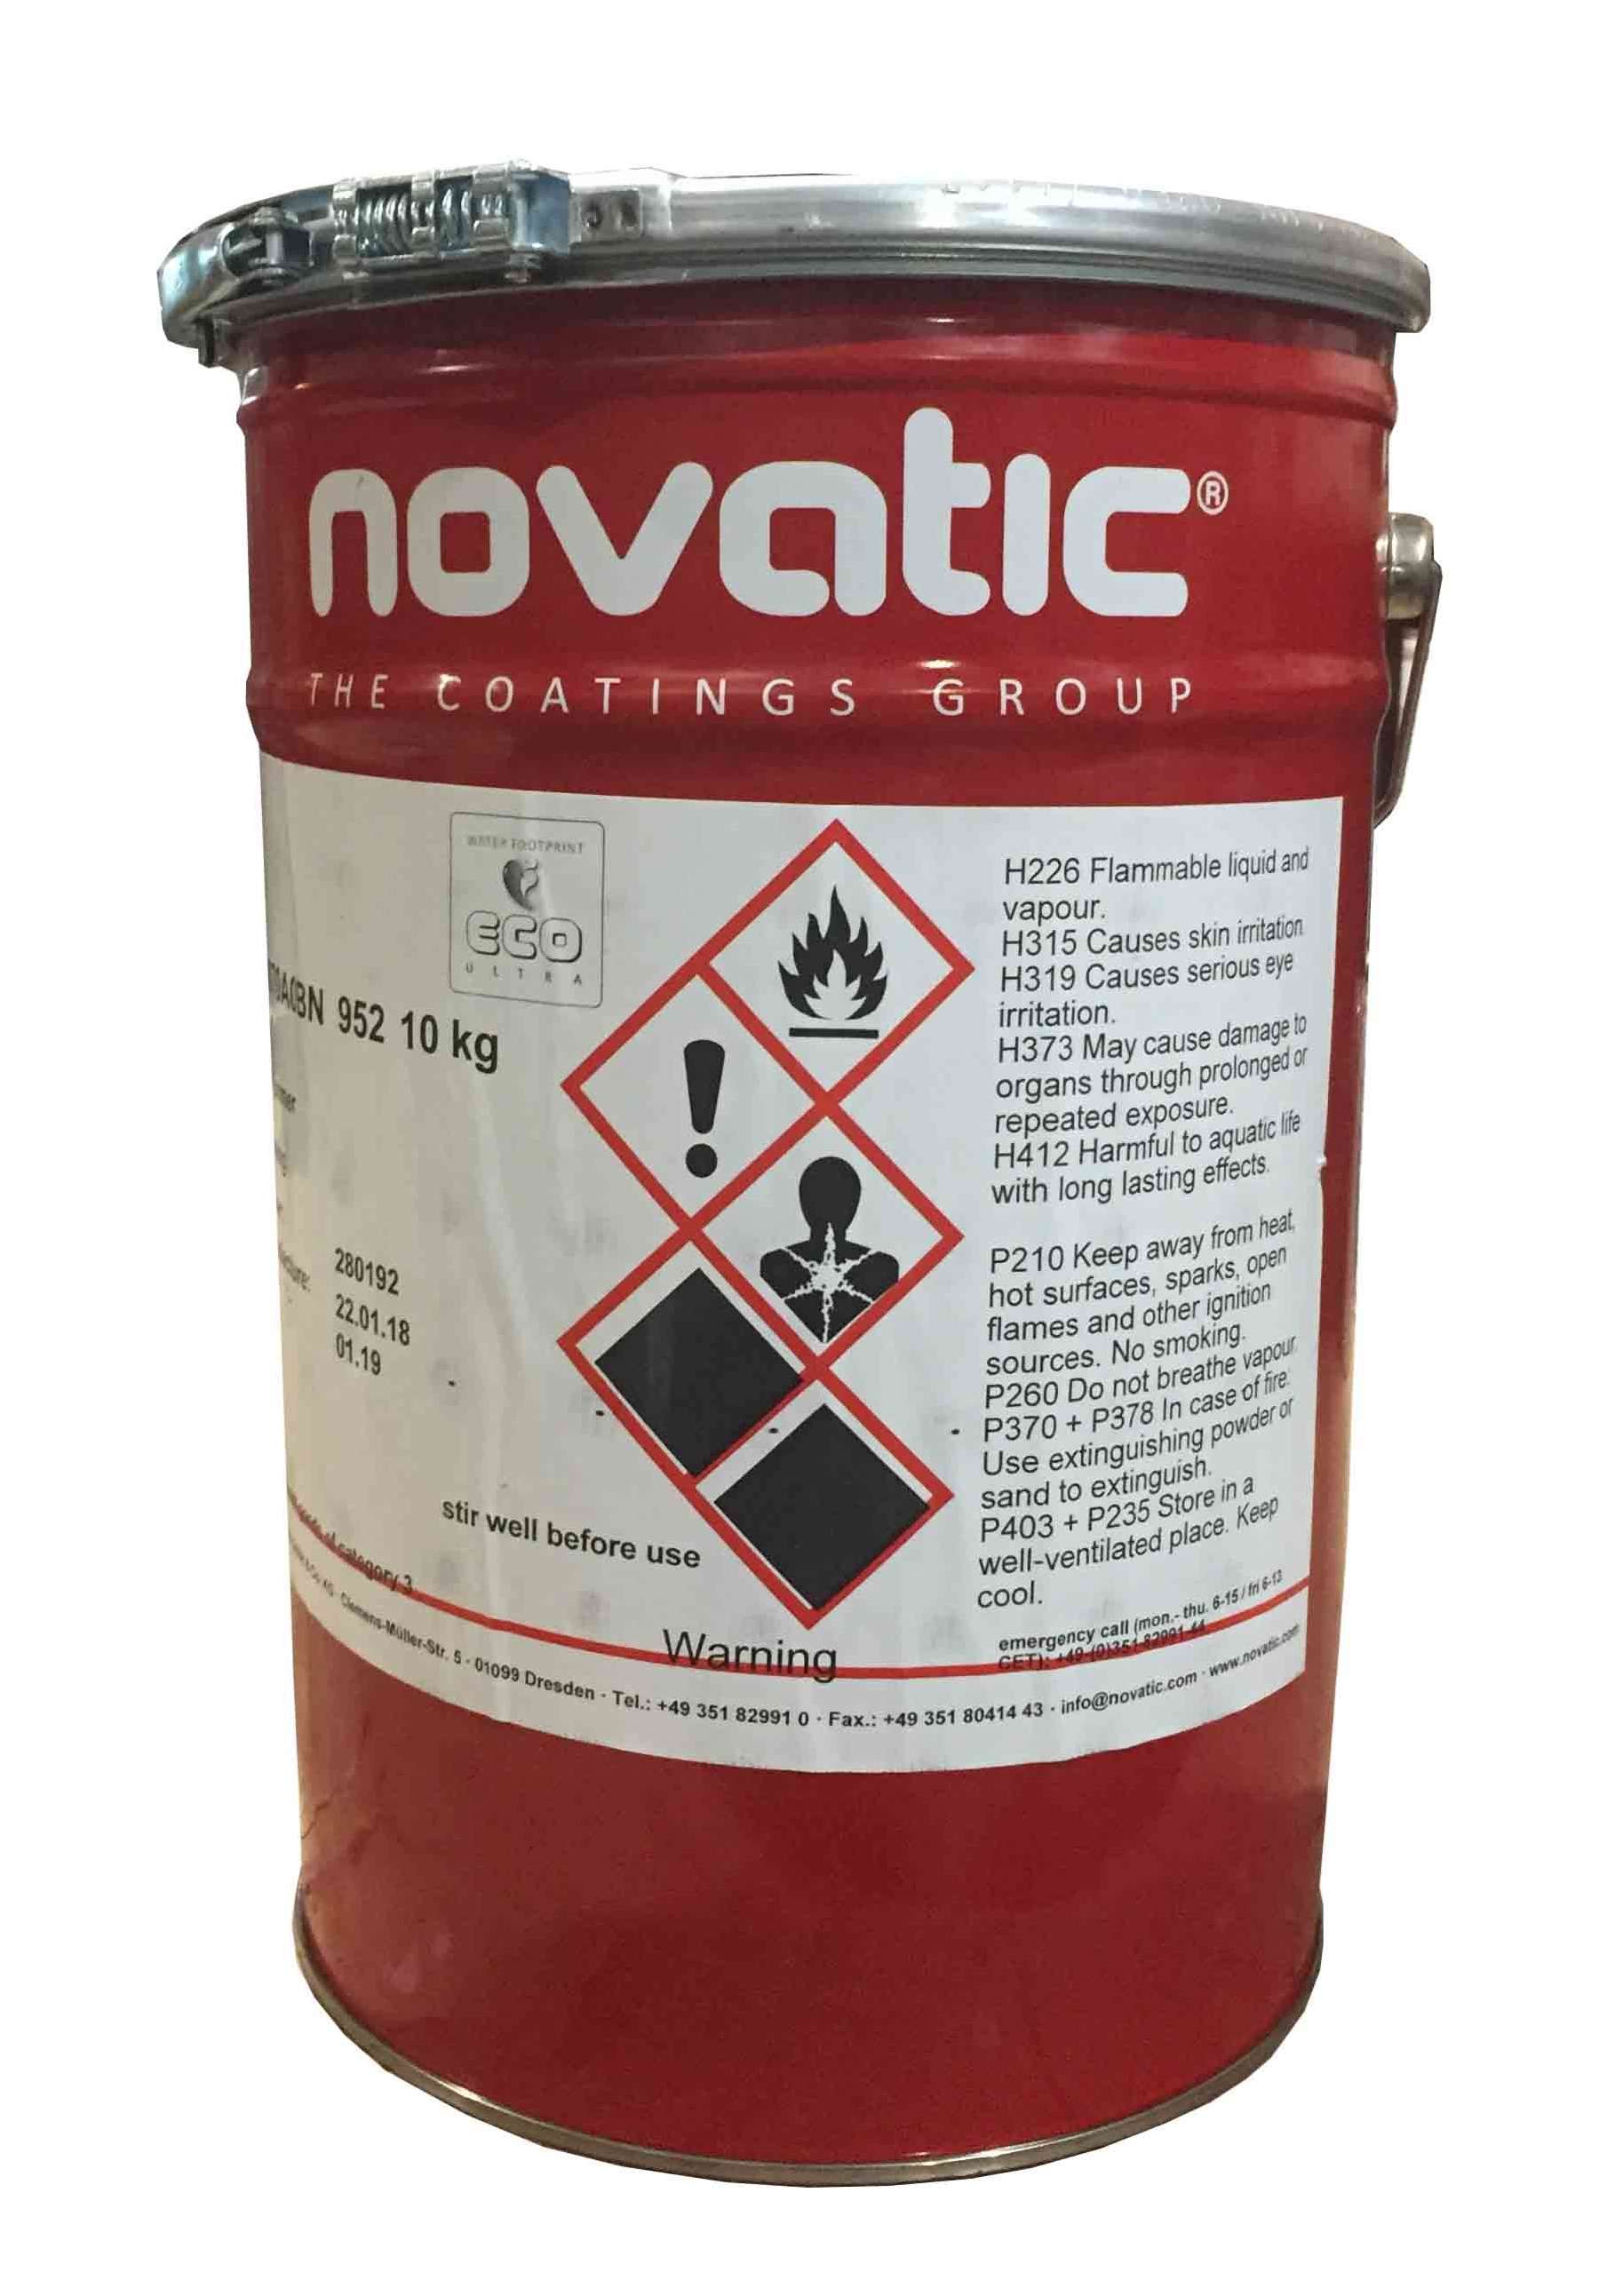 Цинкосодержащий грунт Novatic KG03 1K, 10кг